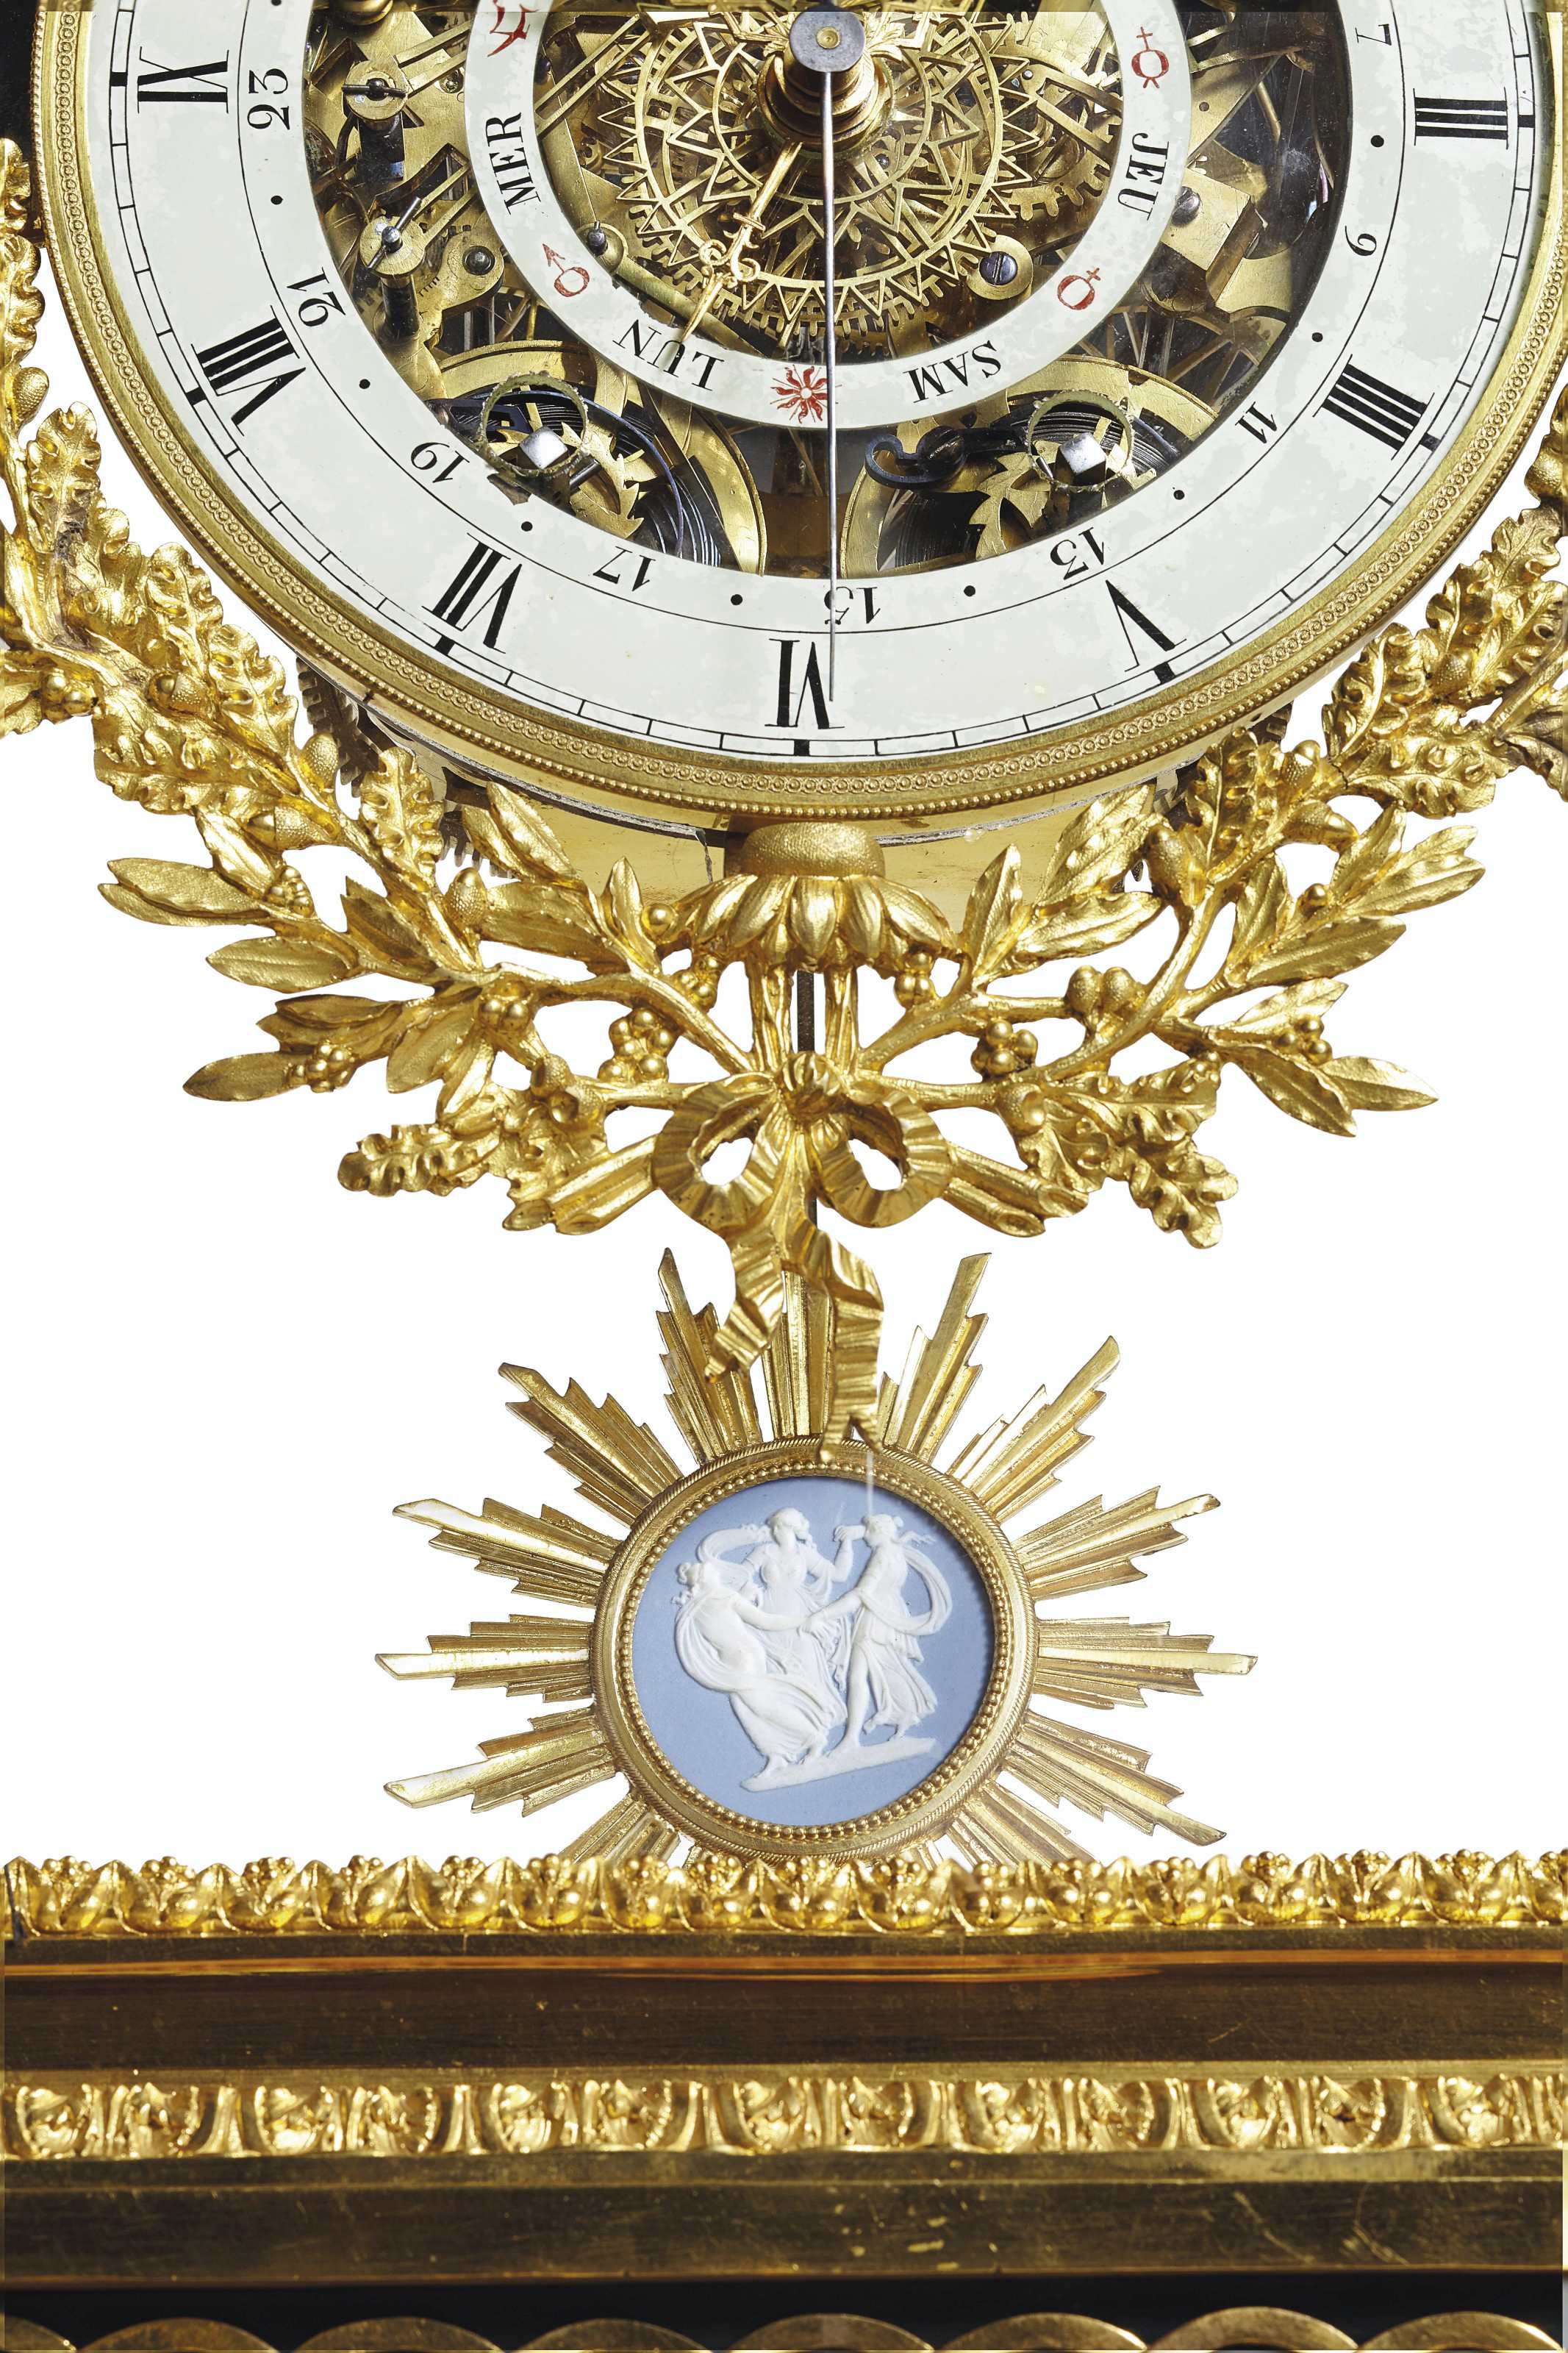 Horloges et pendules du XVIIIe siècle - Page 2 2020_n46